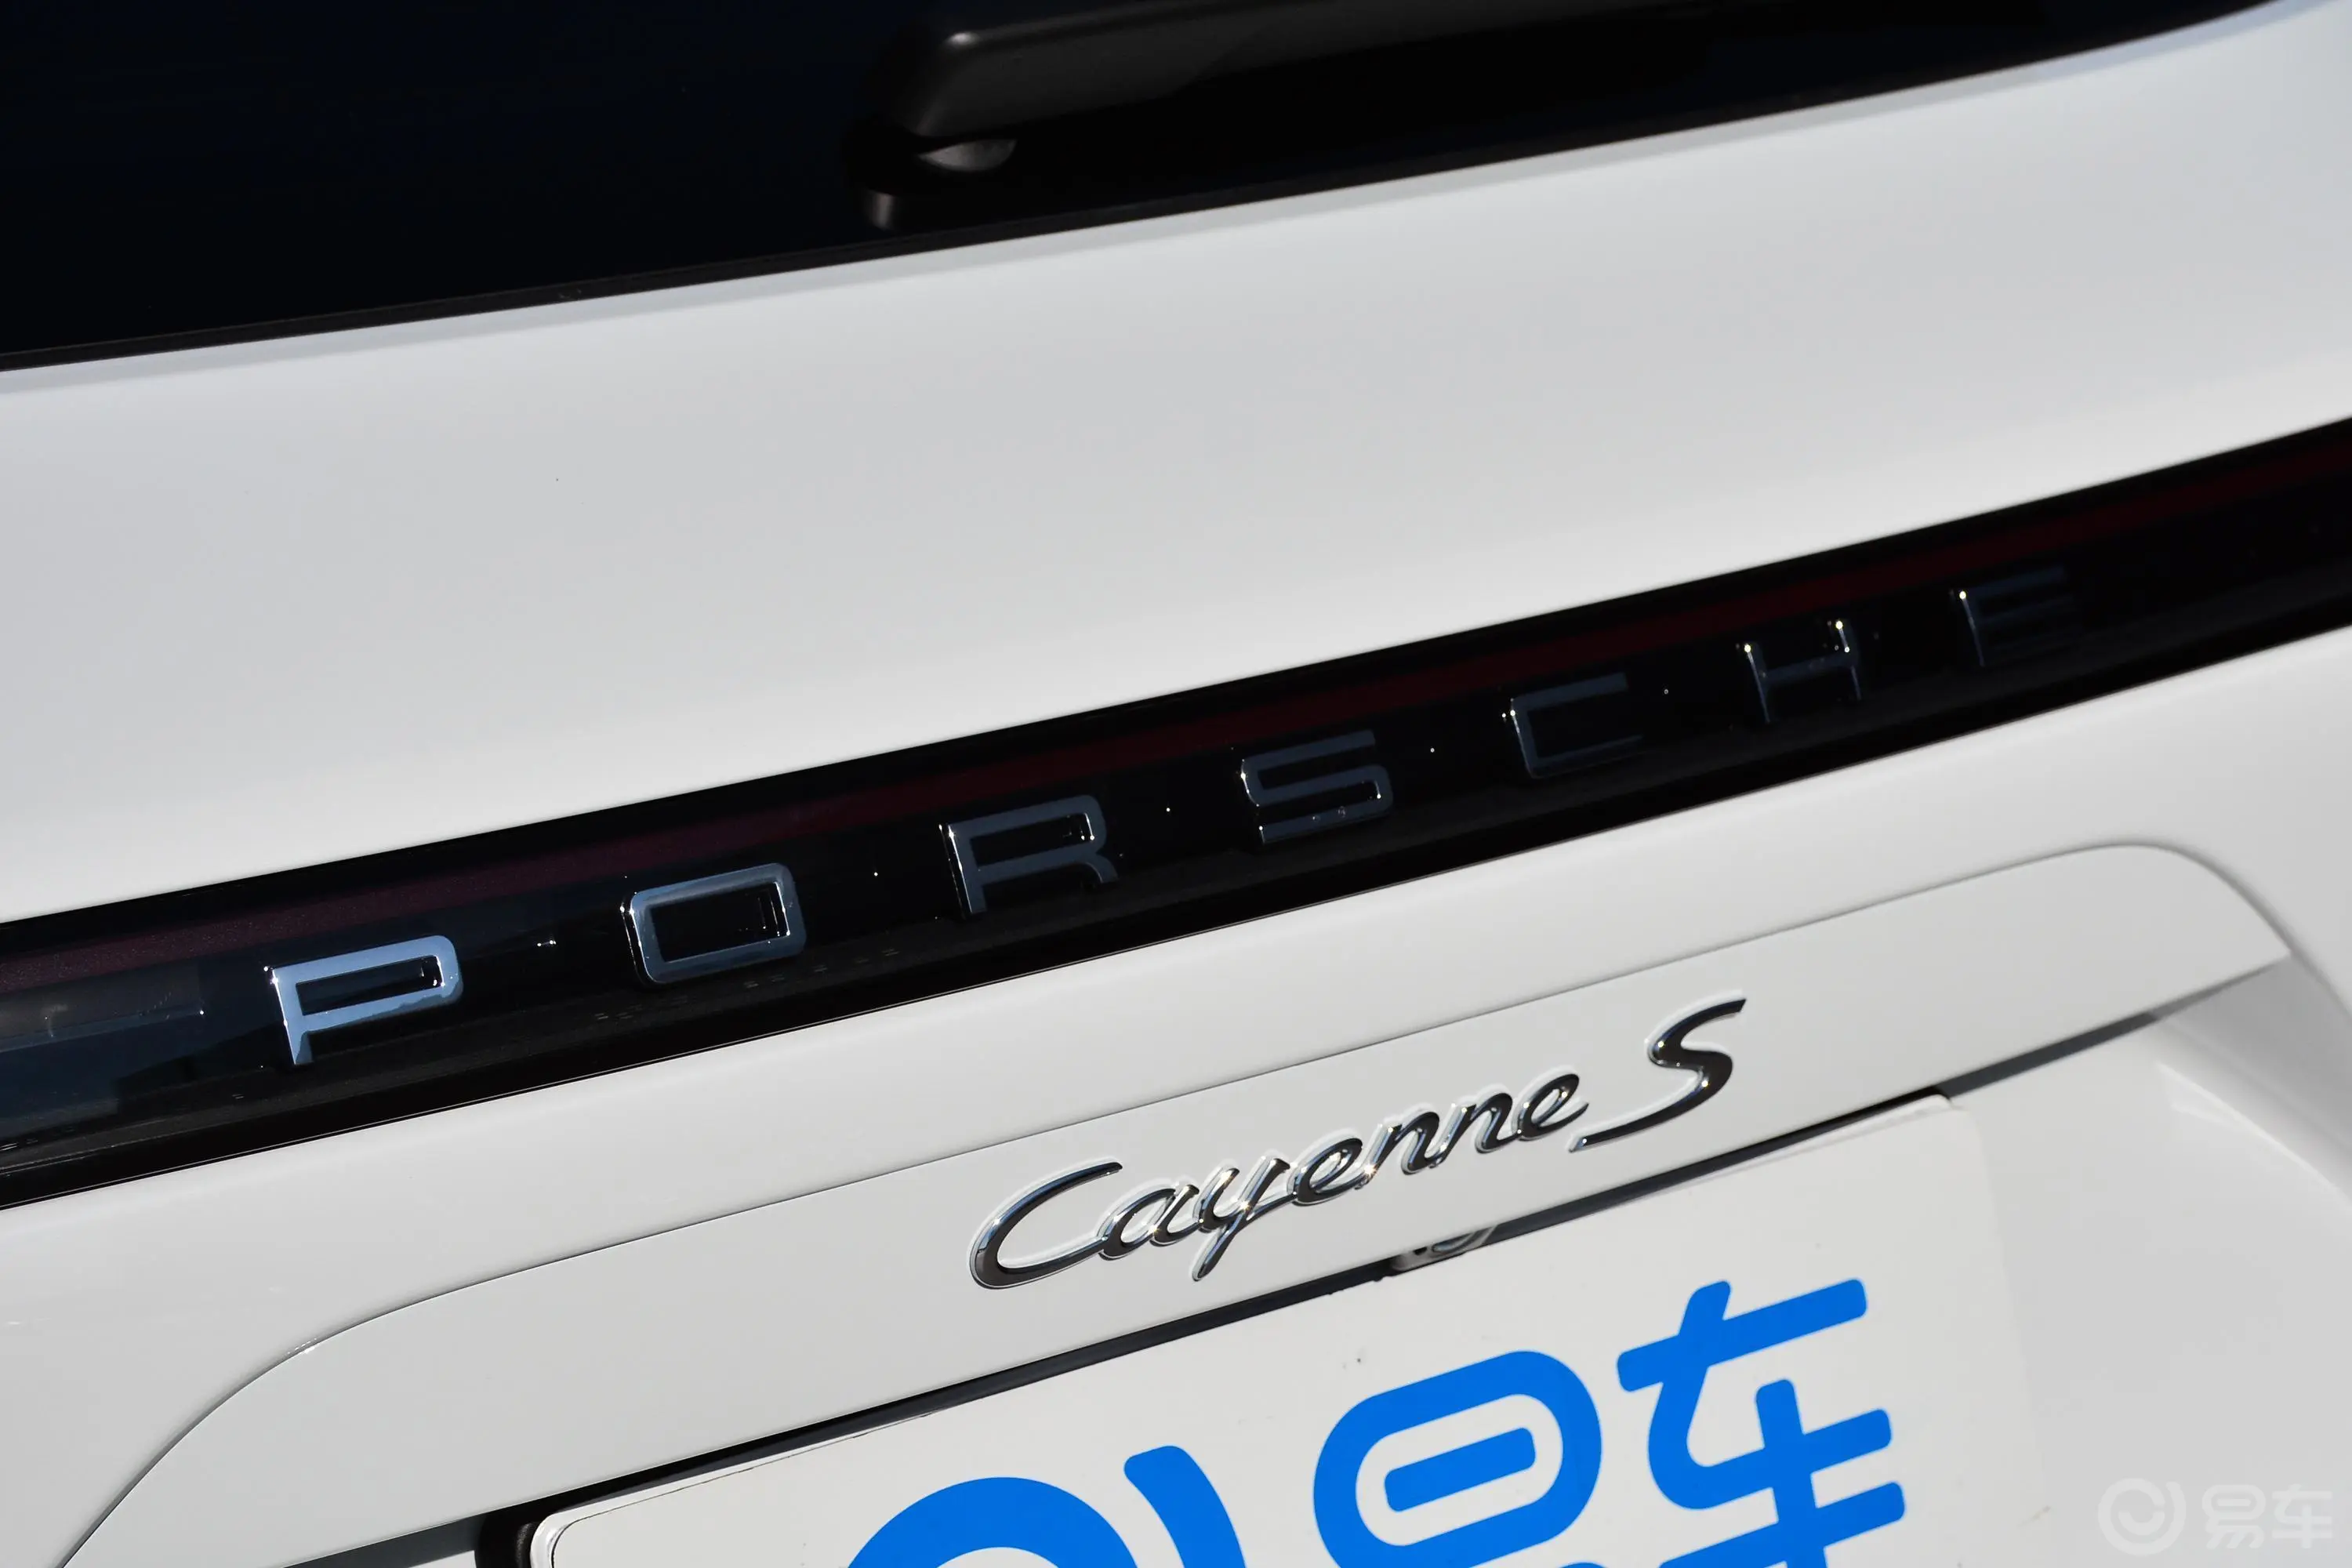 CayenneCayenne S 2.9T外观